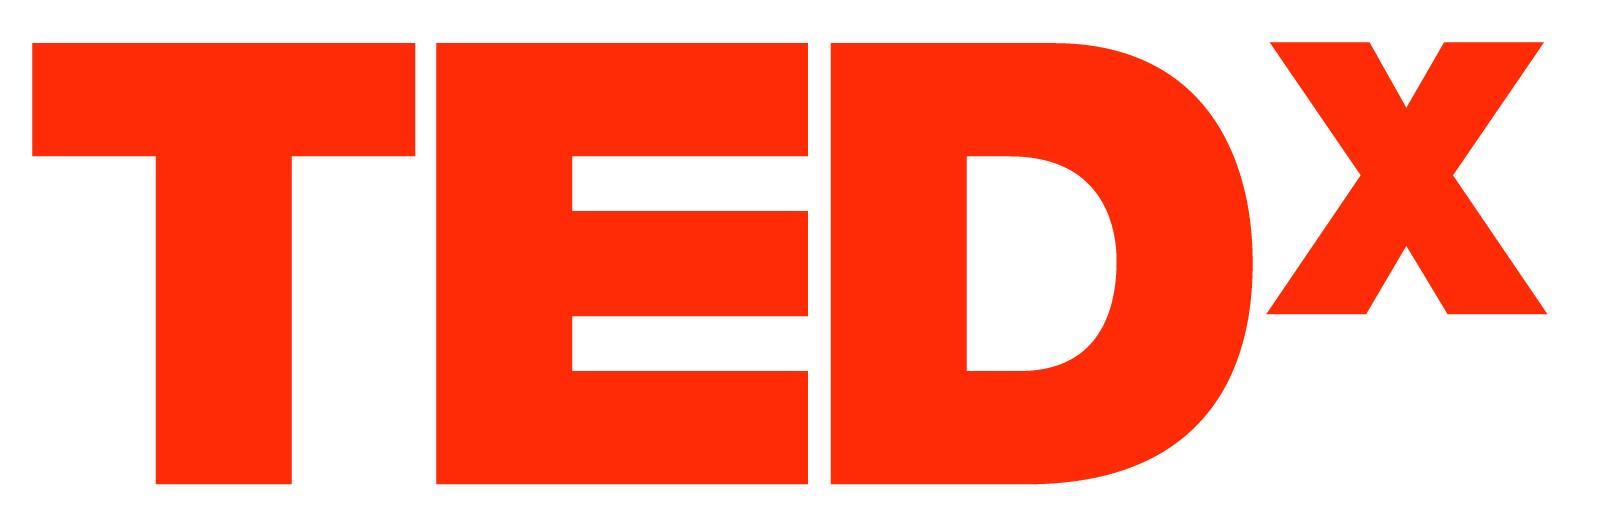 TEDx_logo1.jpg